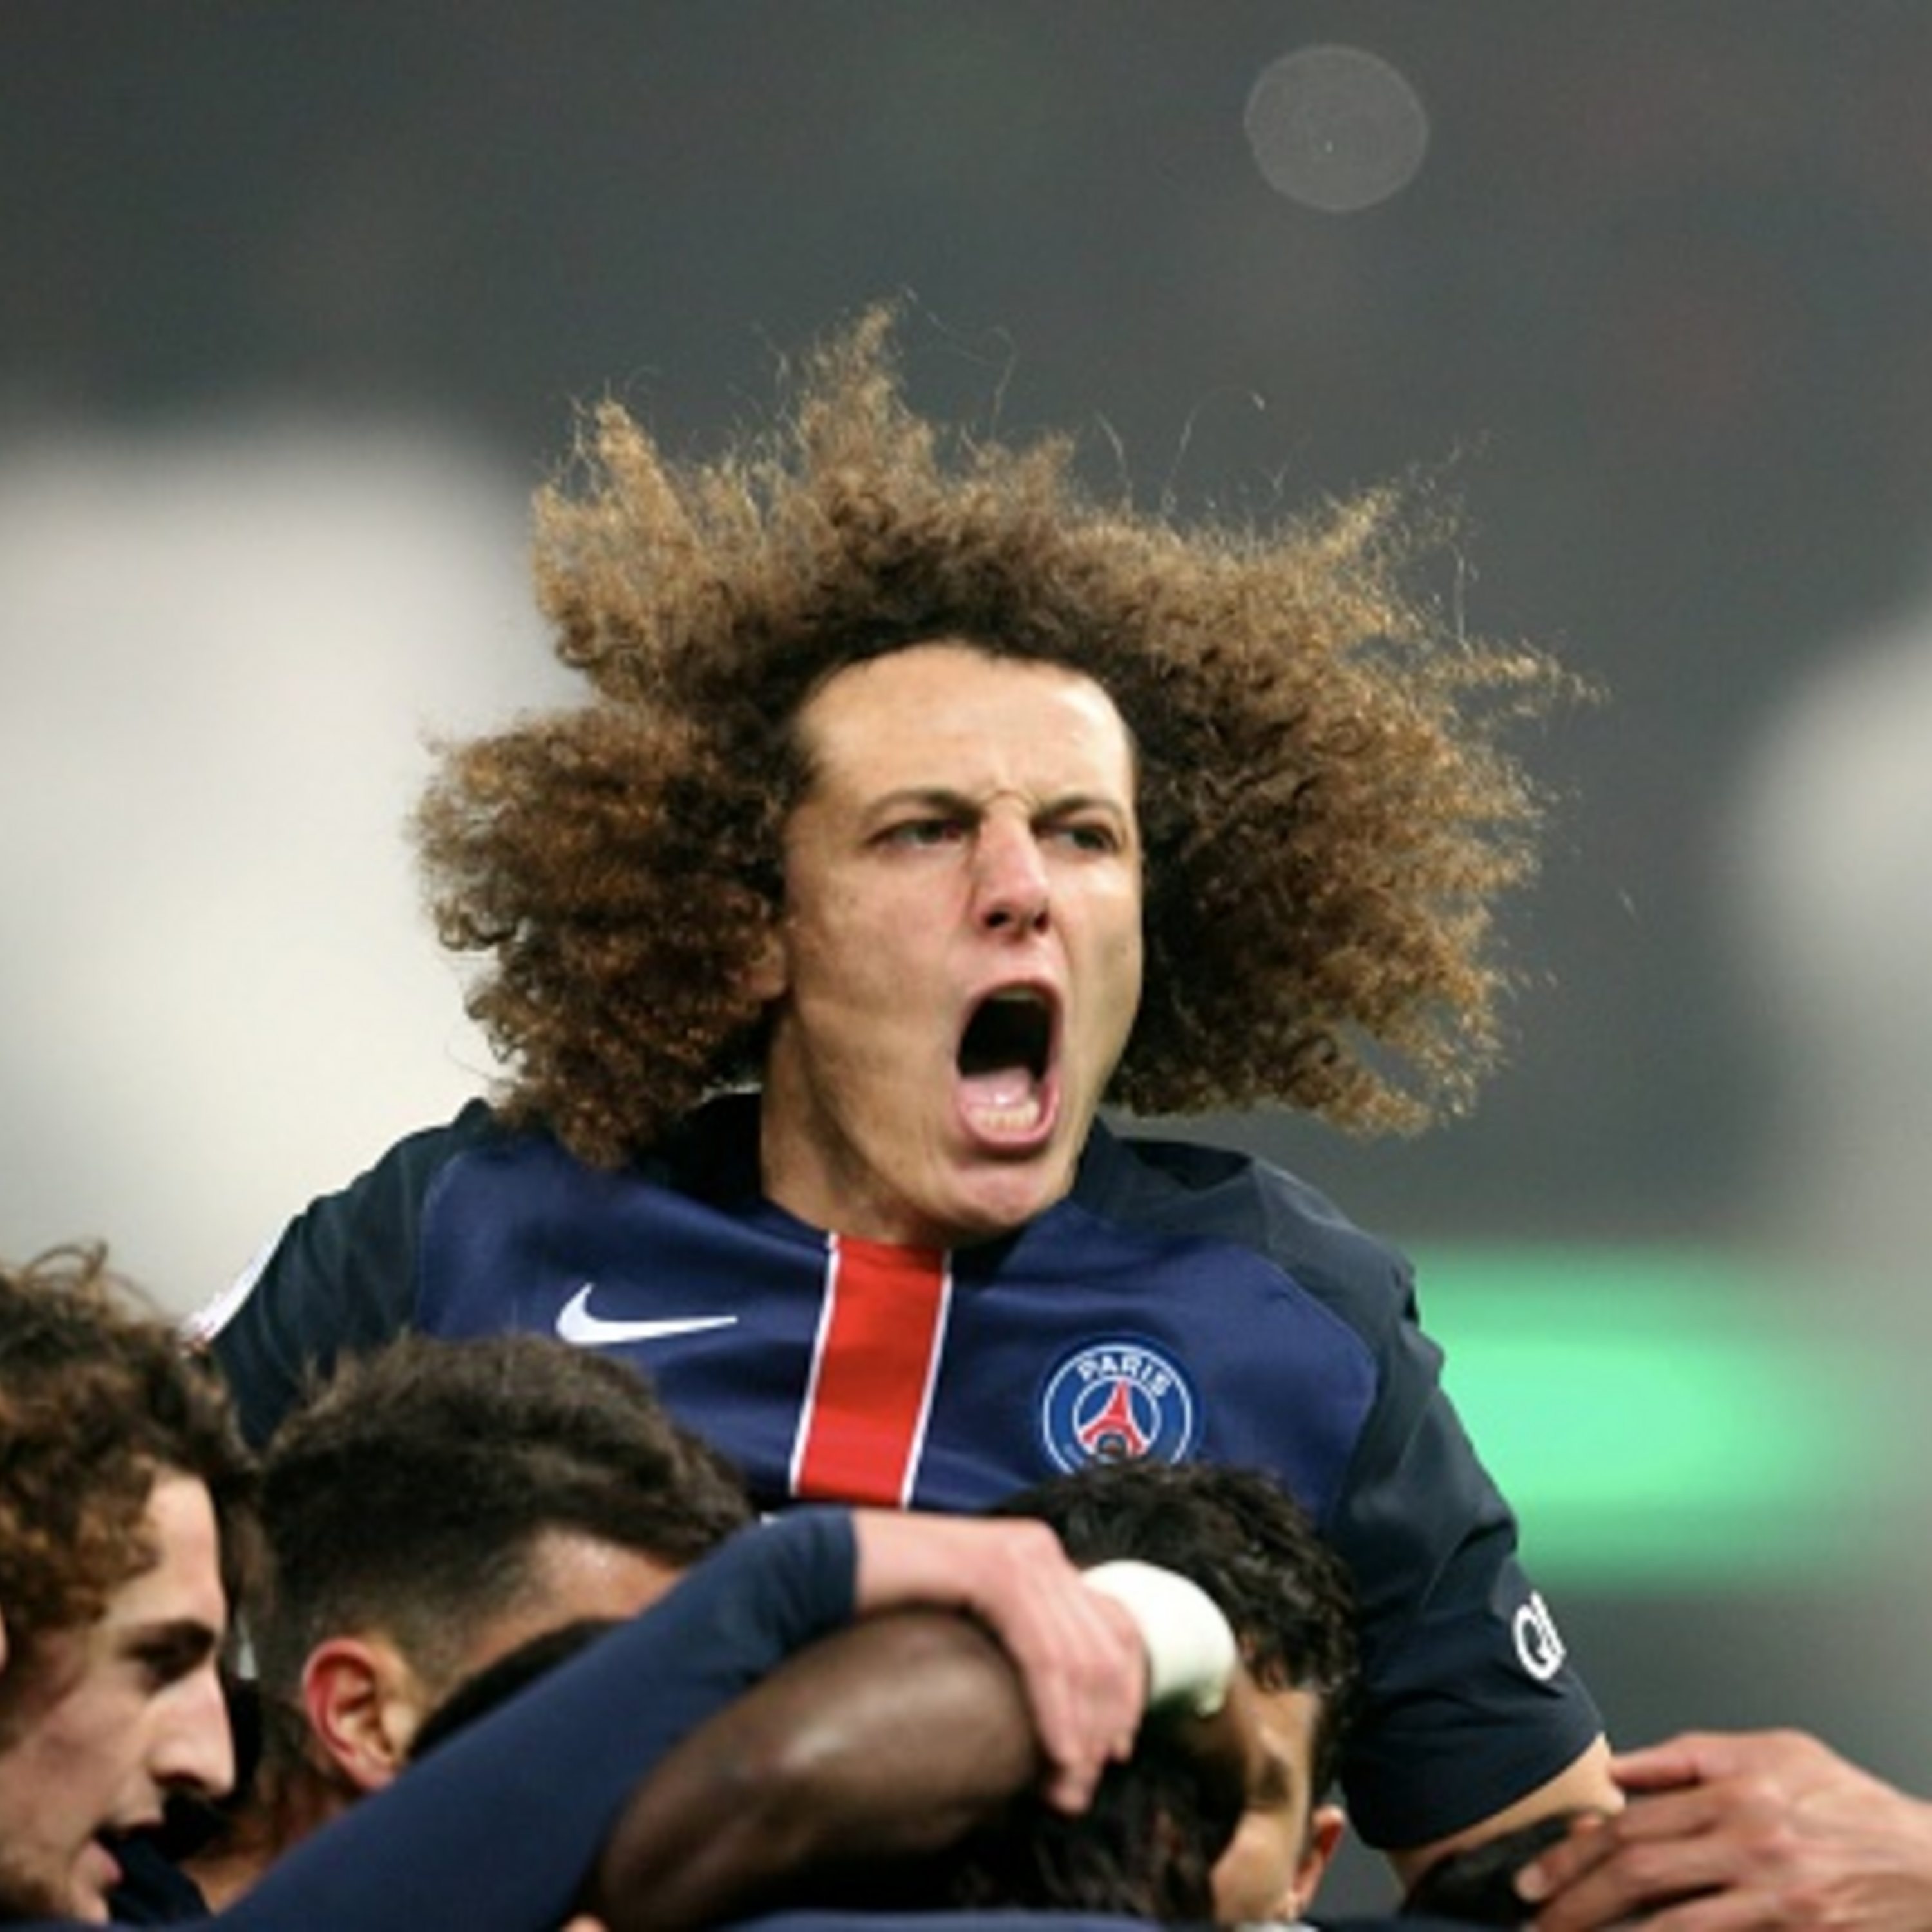 David Luiz, Le Havre and Fifa's Latest Fiasco